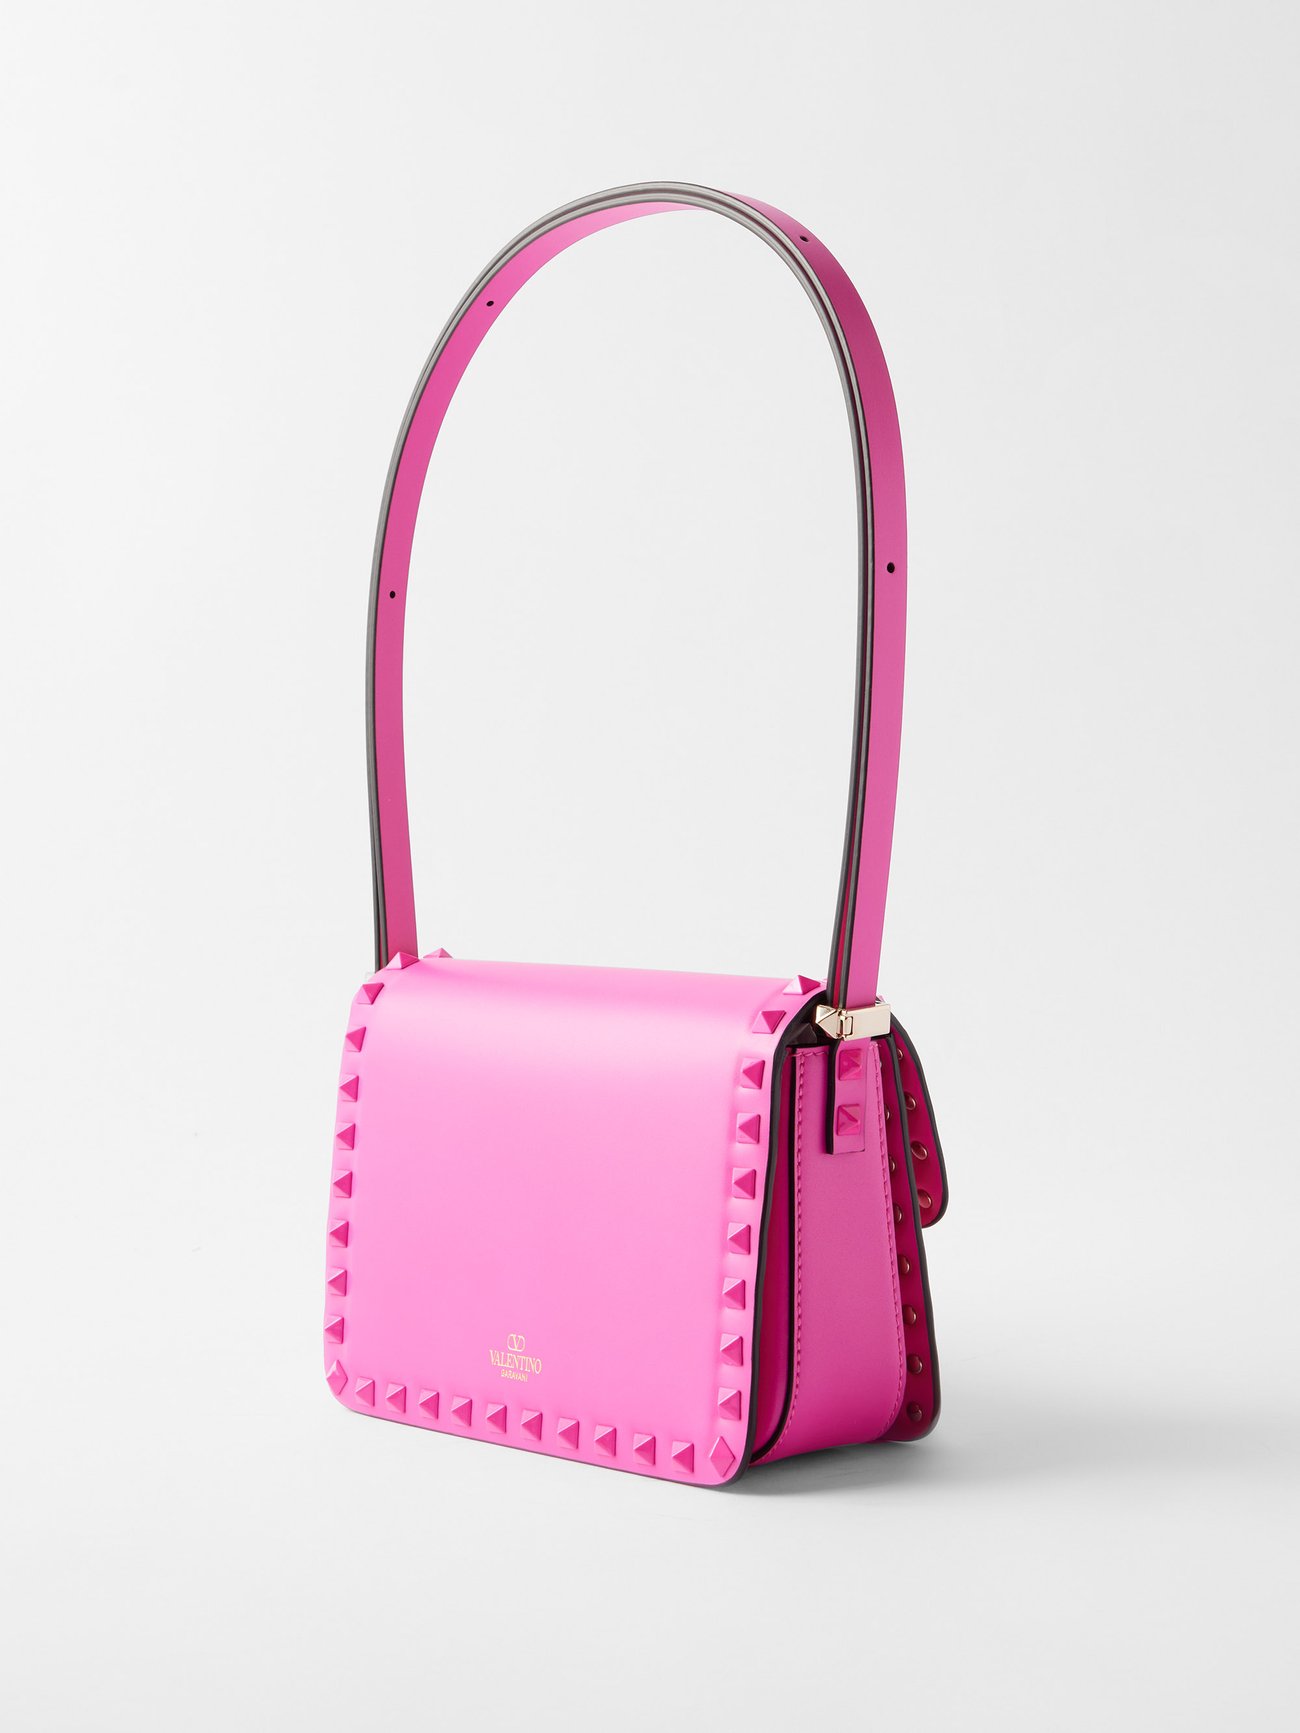 Valentino Garavani, Rockstud Small Textured-leather Shoulder Bag, Pink, One size